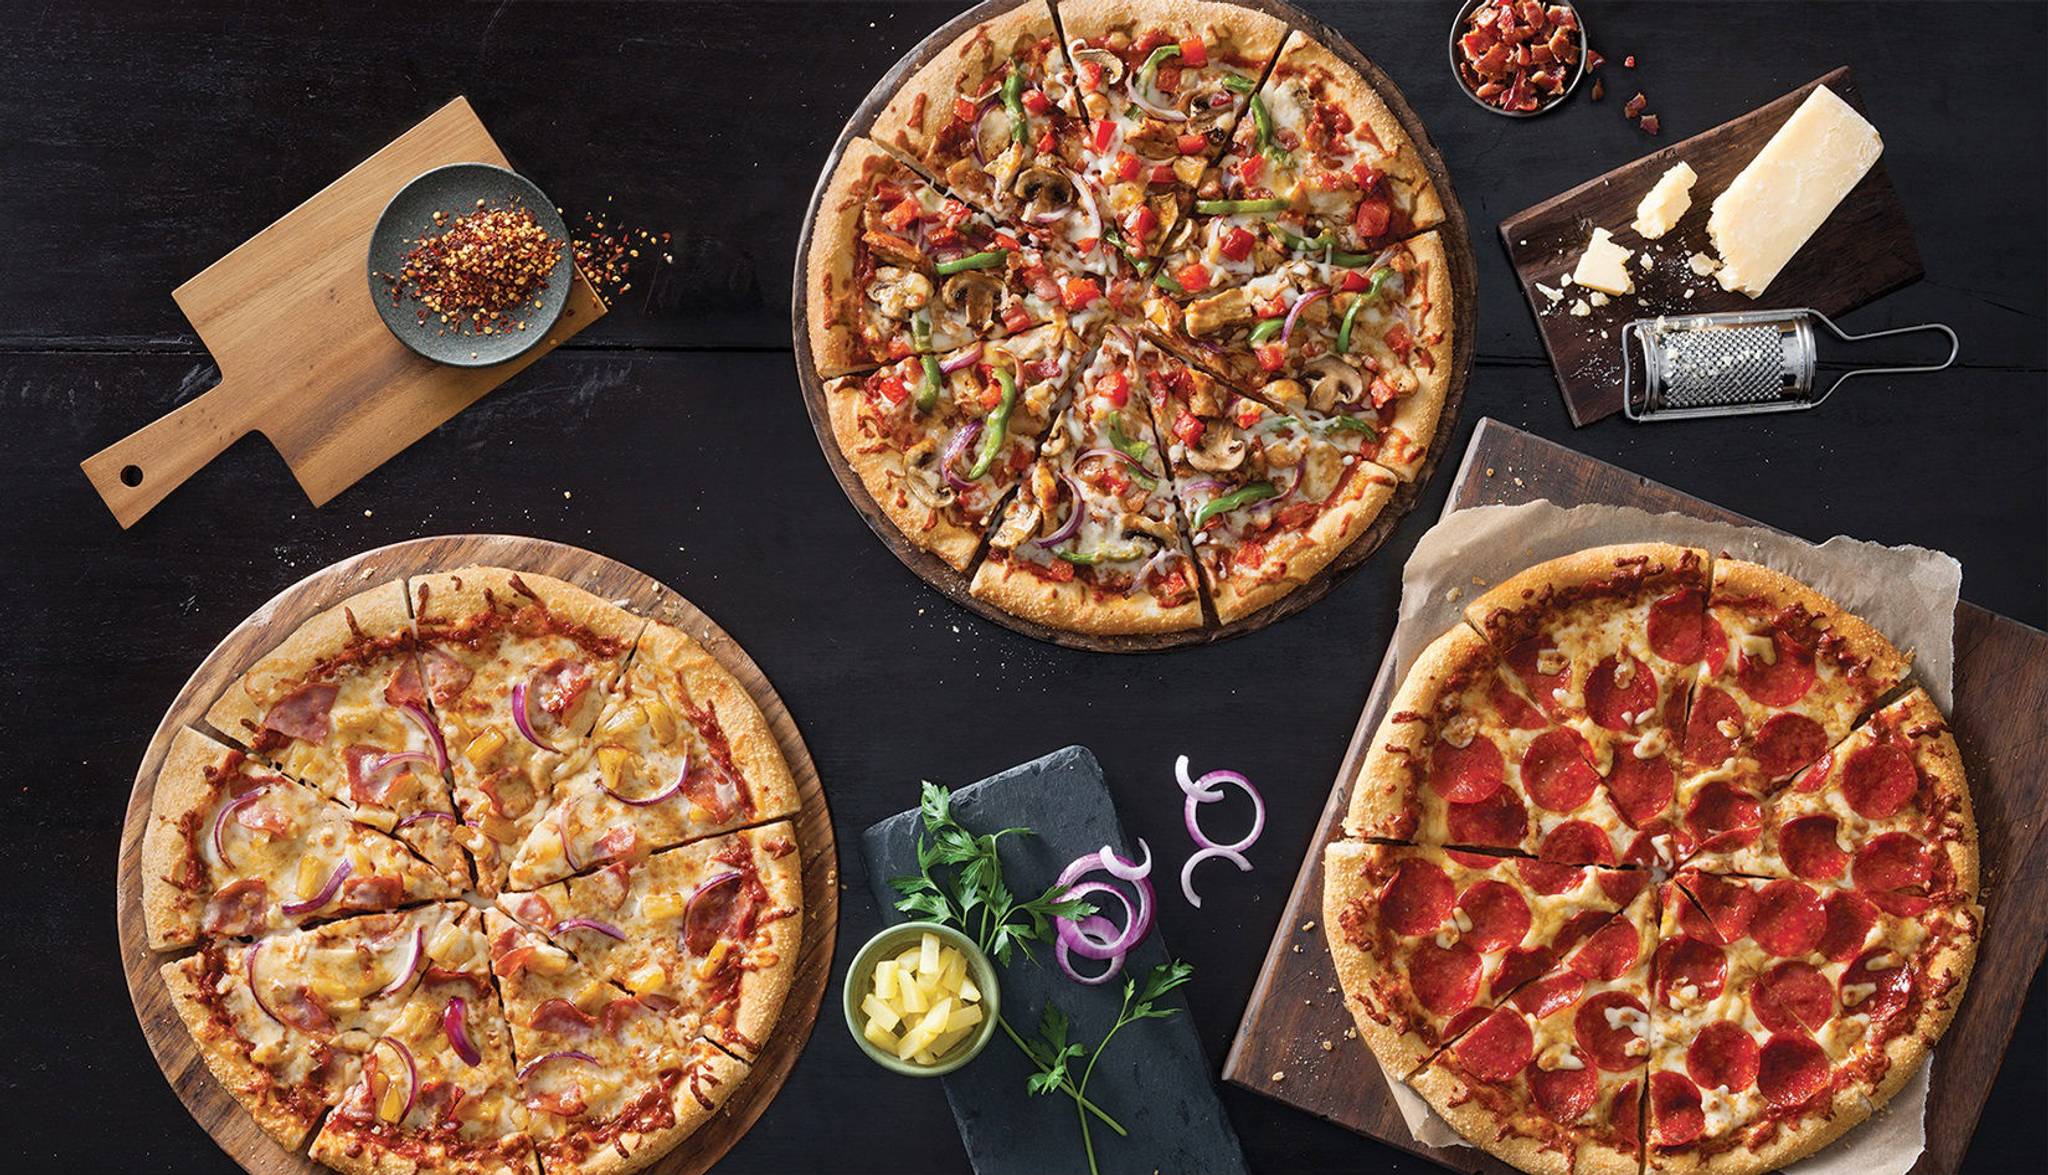 Pizza Hut has an ‘artisanal’ rebrand